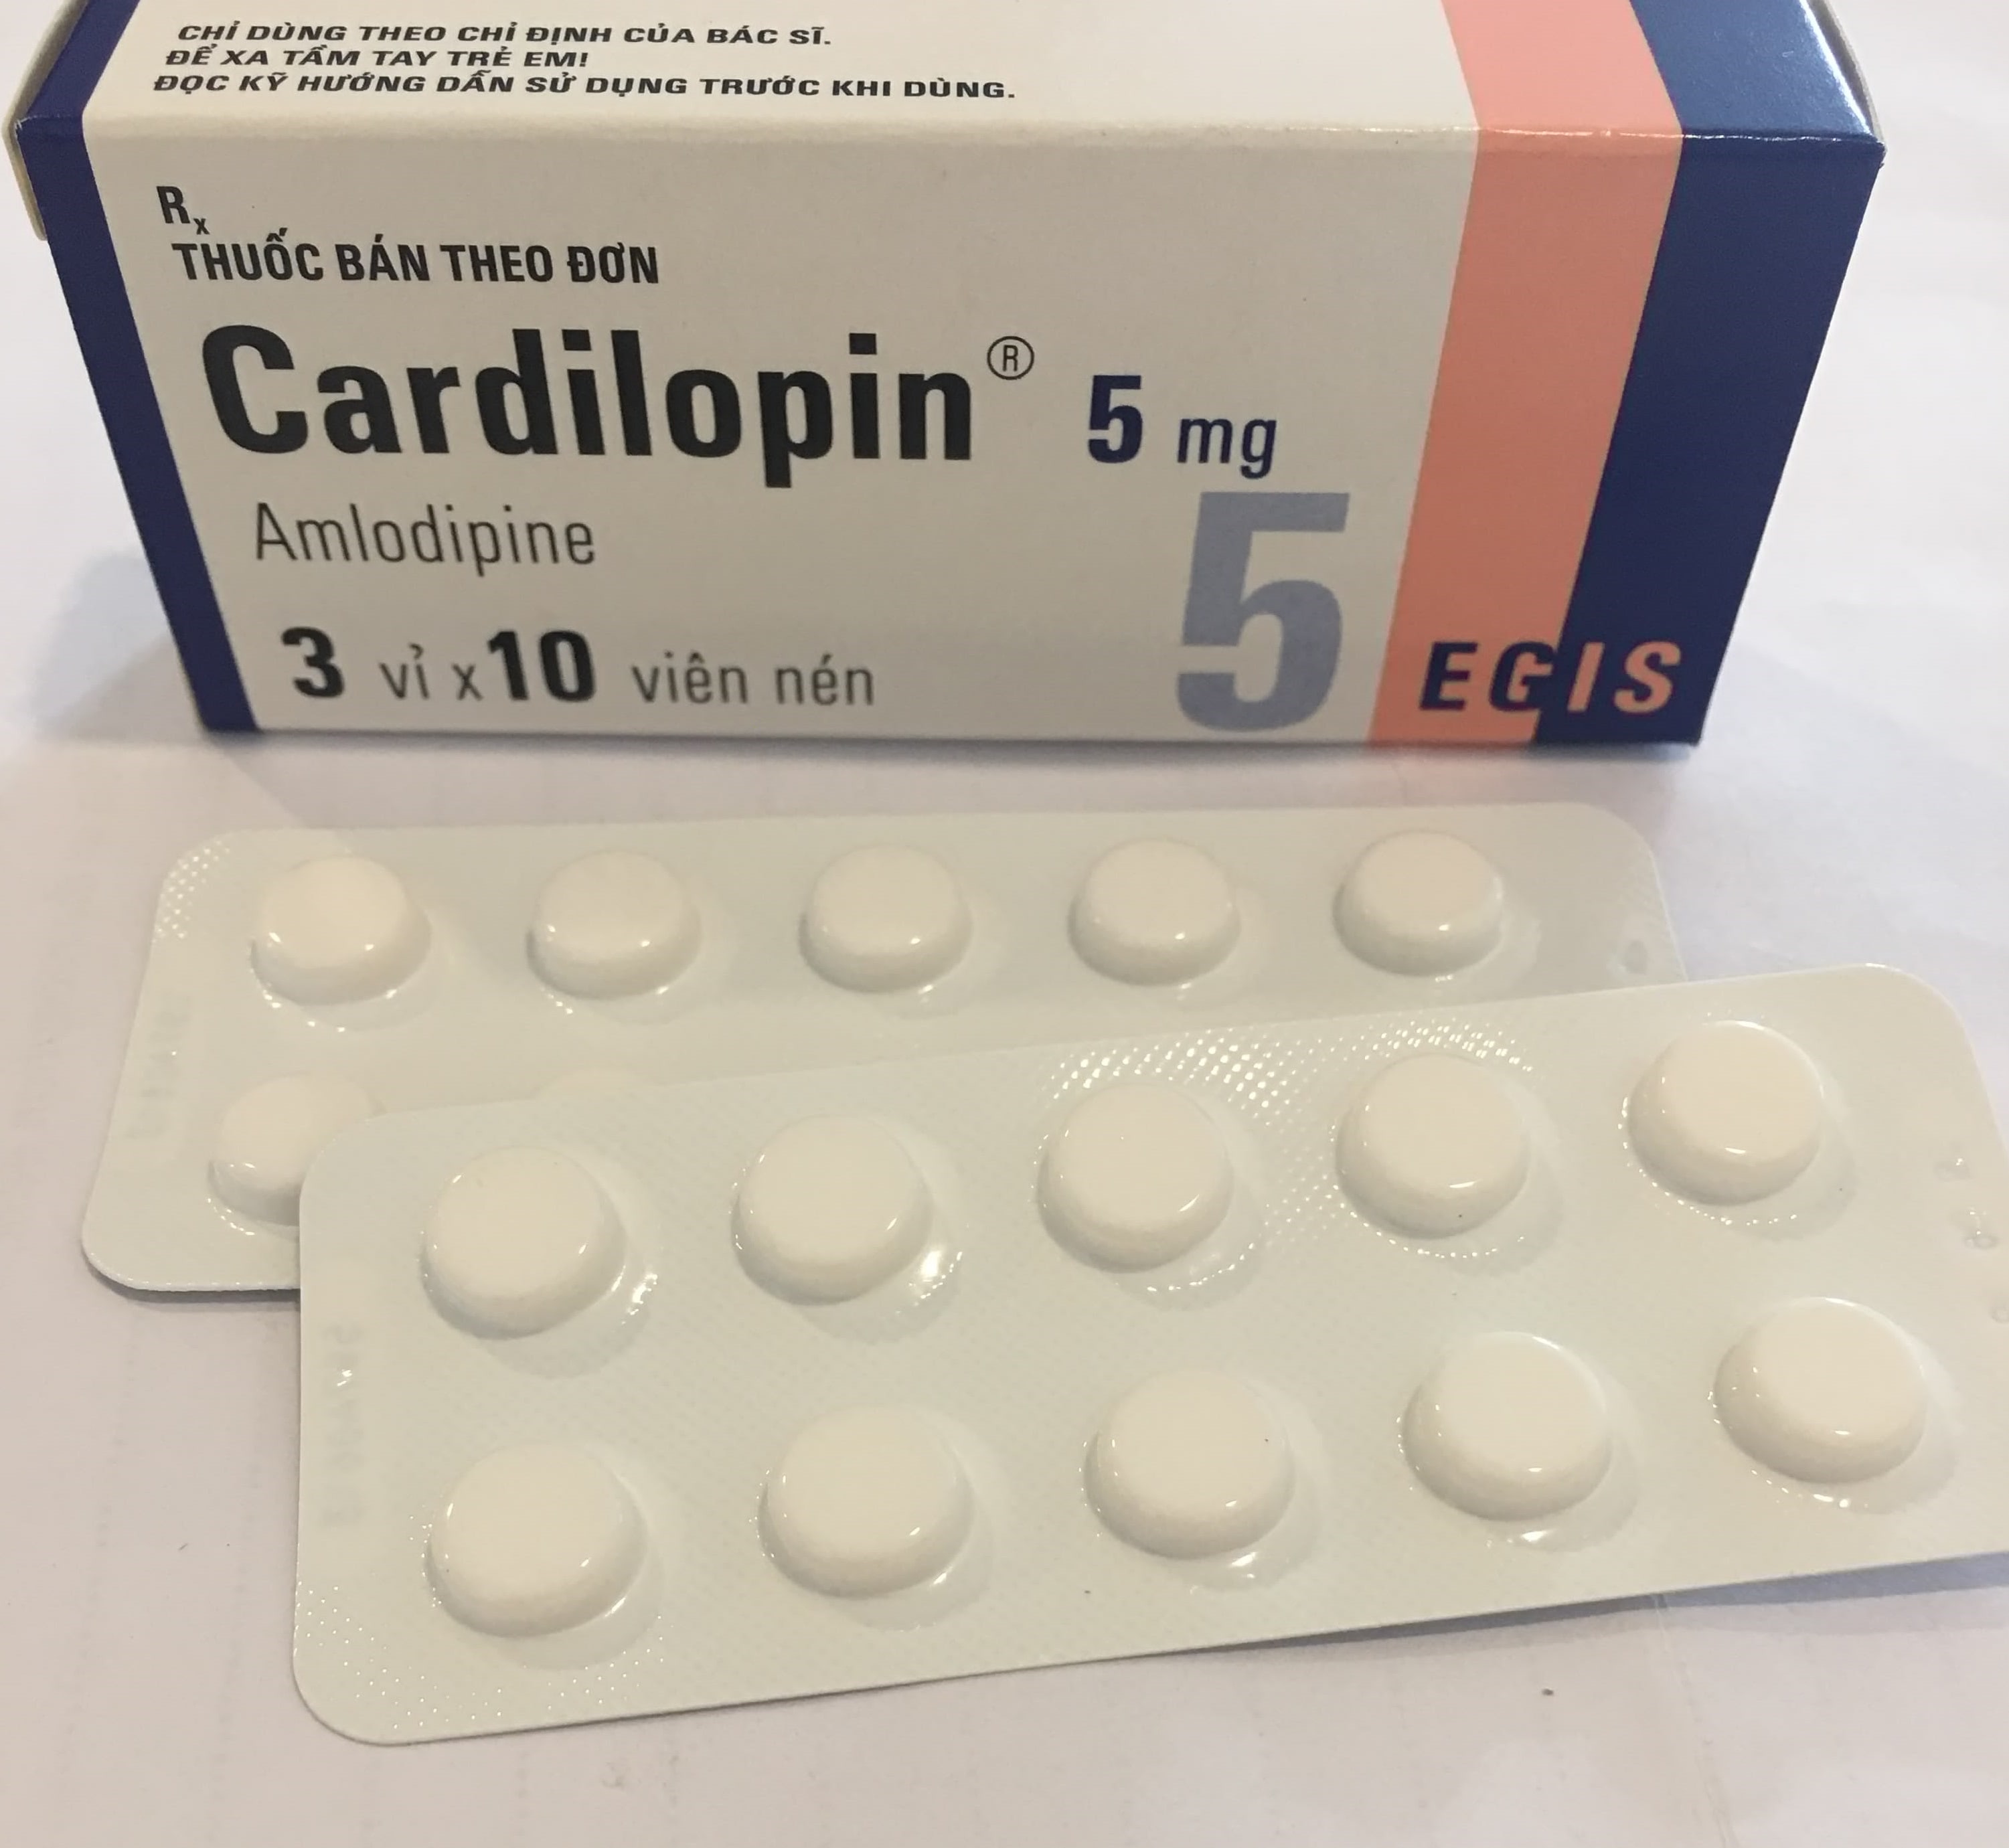 Cardilopin 5 mg Egis H/30 viên